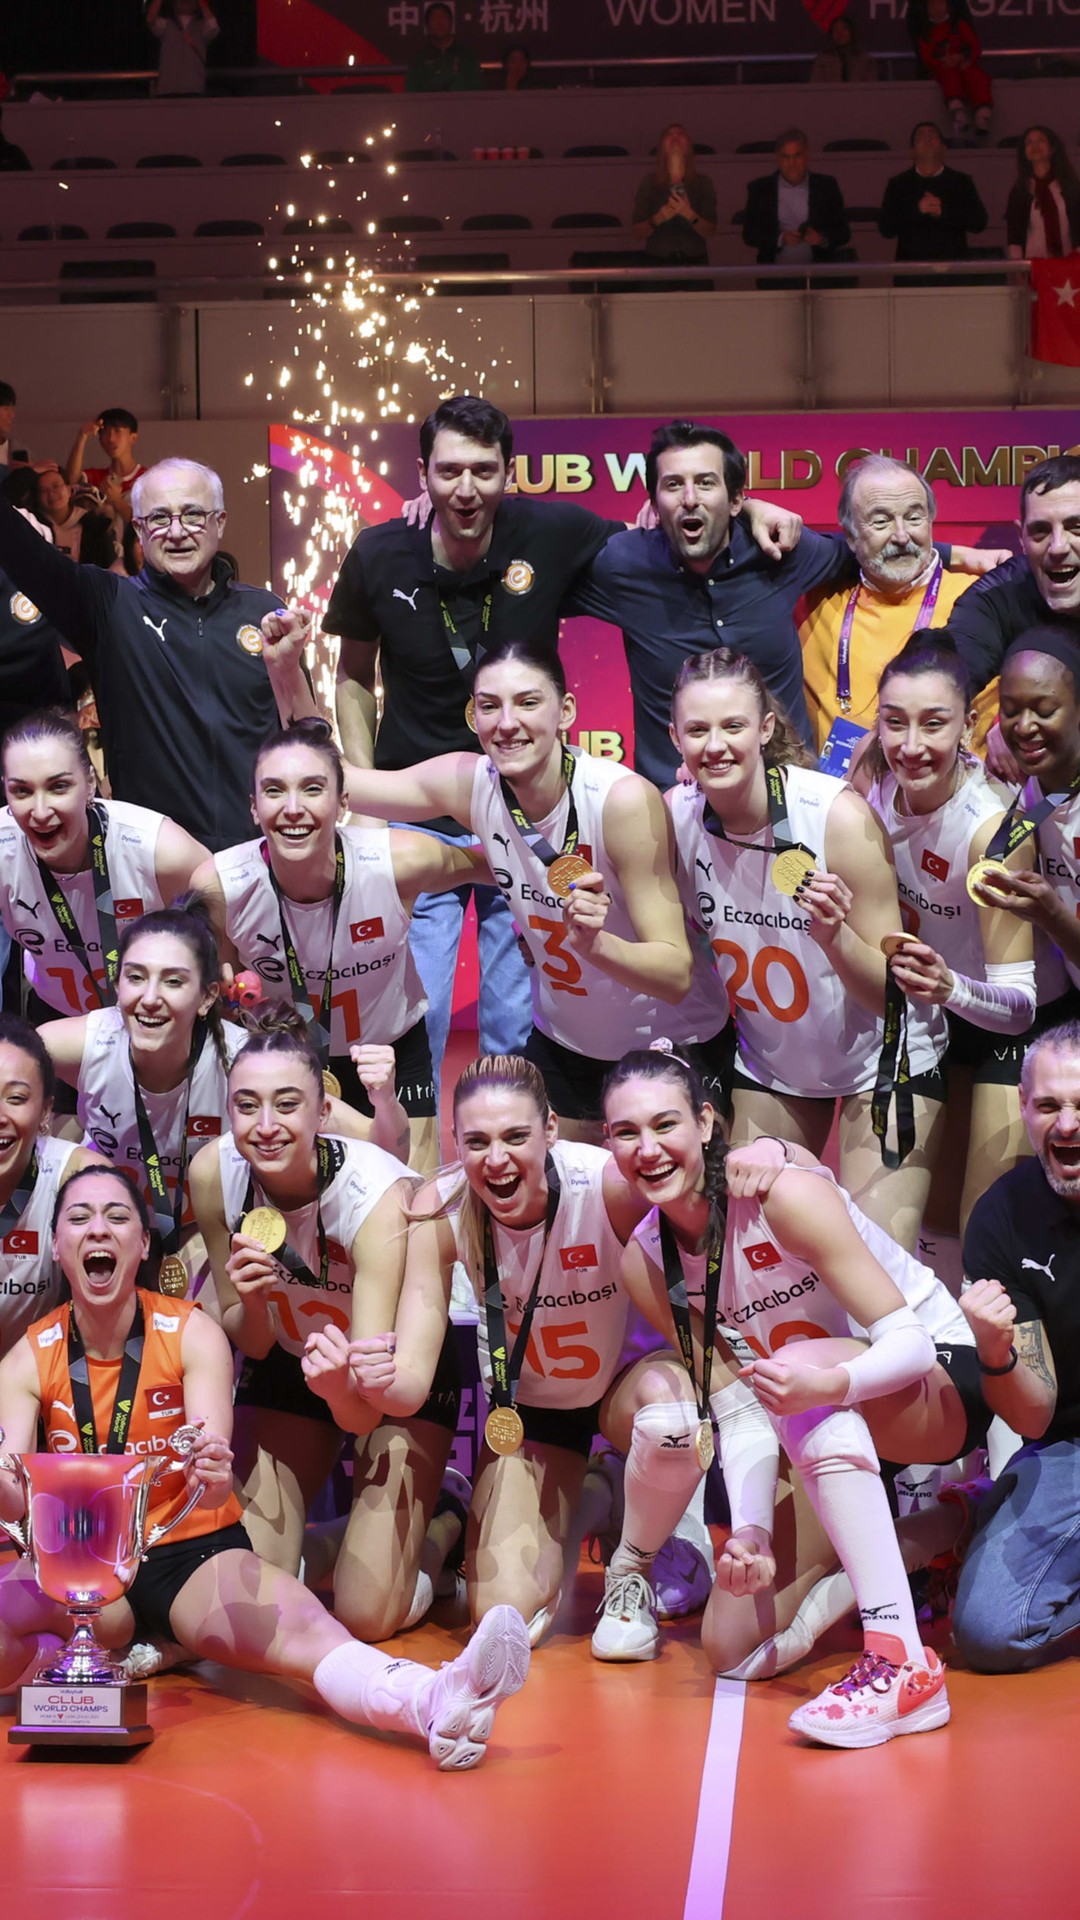 Minas vence Praia Clube e conquista a Copa Brasil de Vôlei Feminino de 2023  - Superesportes